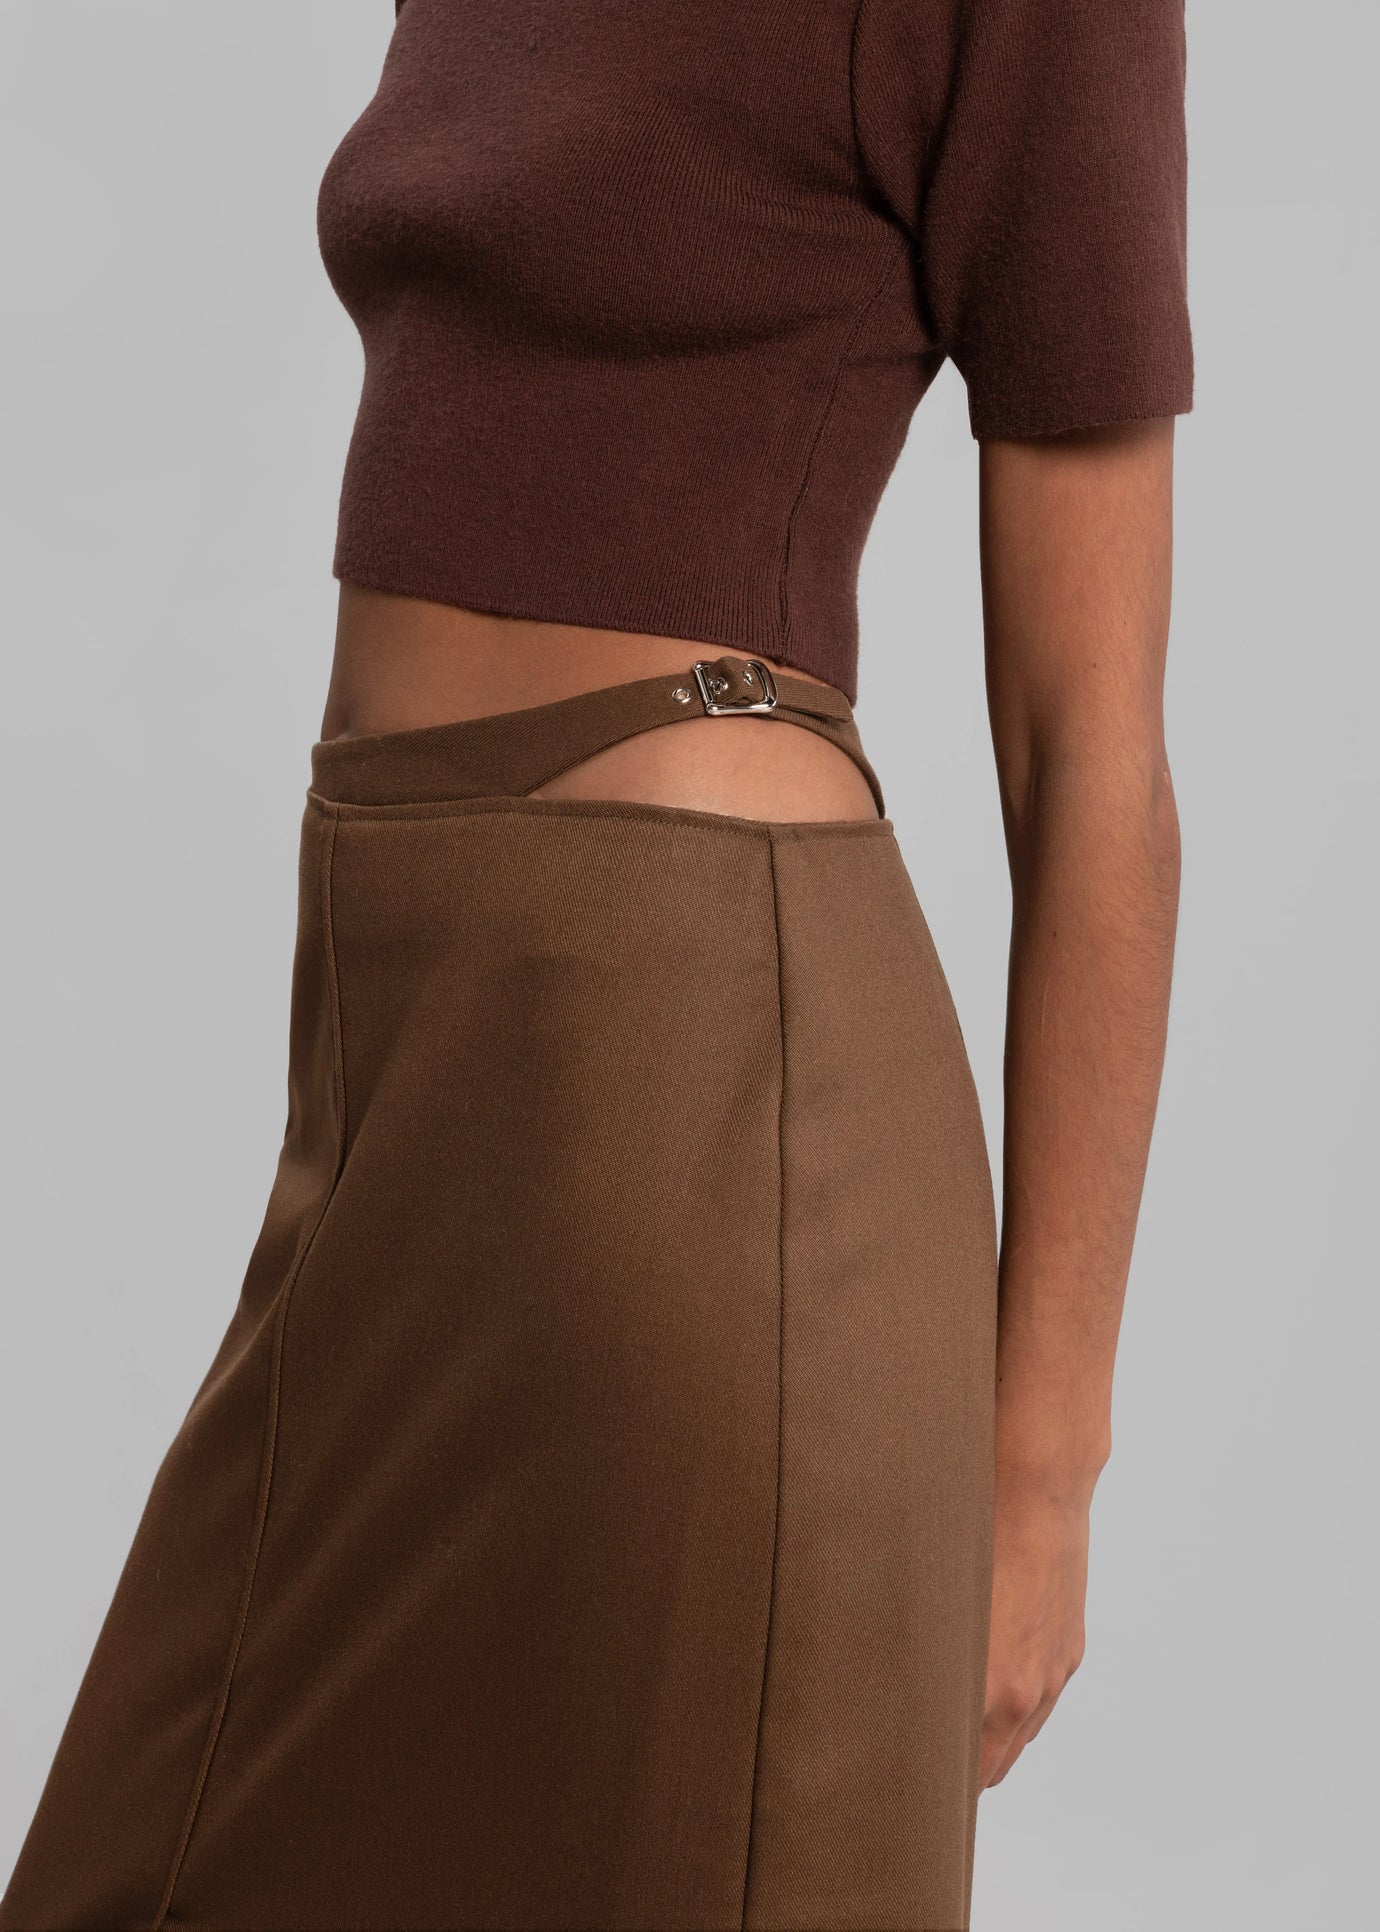 Stacia Cut Out Midi Skirt - Brown - 1